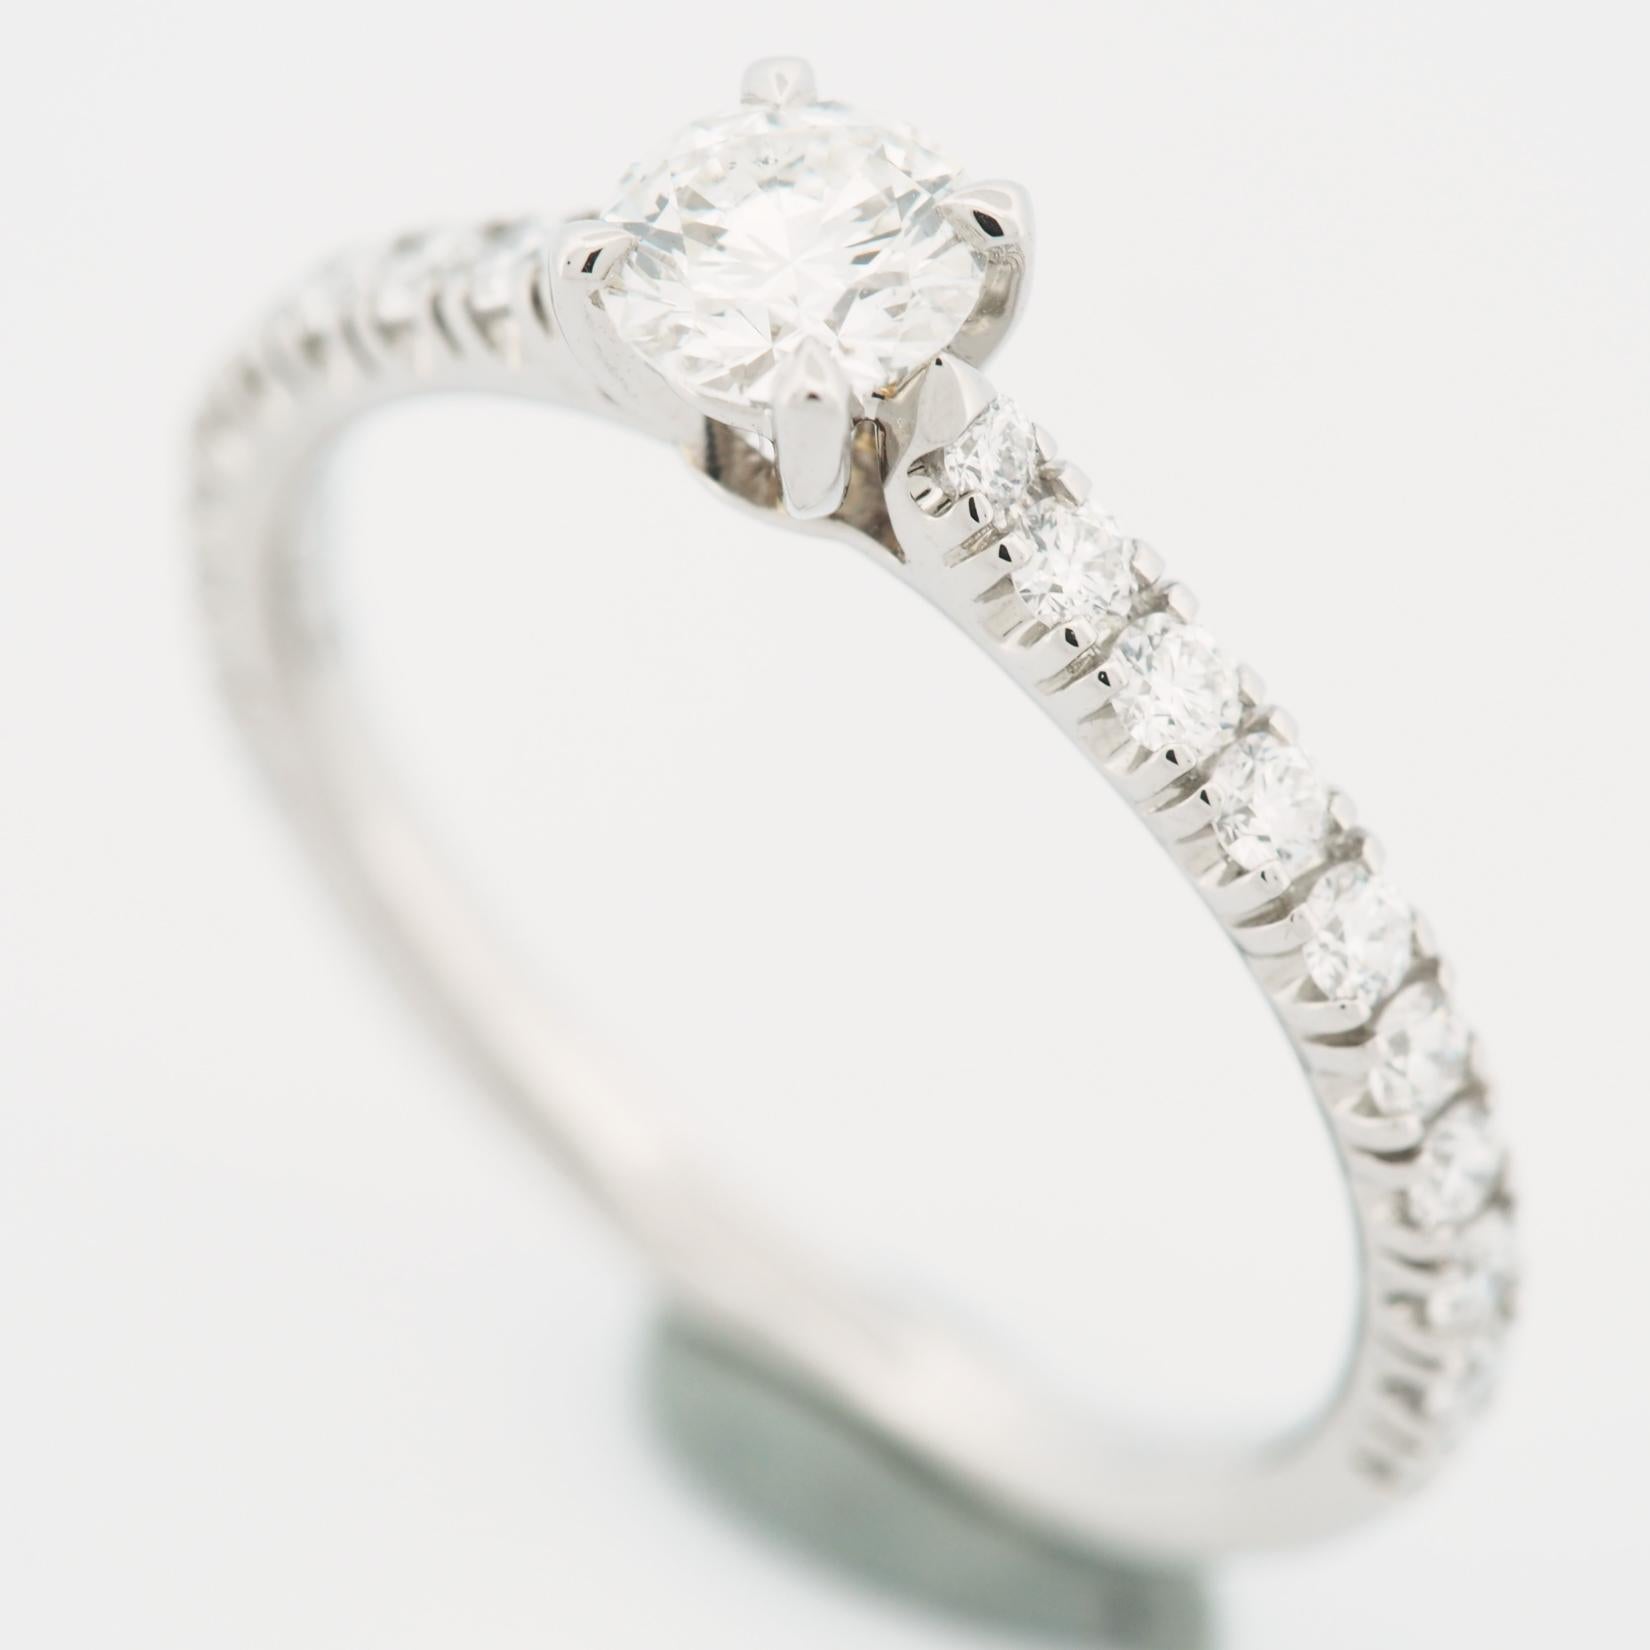 Item: Authentic Cartier Etincelle Diamond Solitaire Ring
Stones: Diamond ( center stone 0.31ct )
Color: G
Clarity:VS1
Polish: Excellent
Symmetry: Excellent
Fluorescence: None
Metal: Platinum 950
Ring Size: 49 US SIZE 4.75 UK SIZE I 3/4 
Internal